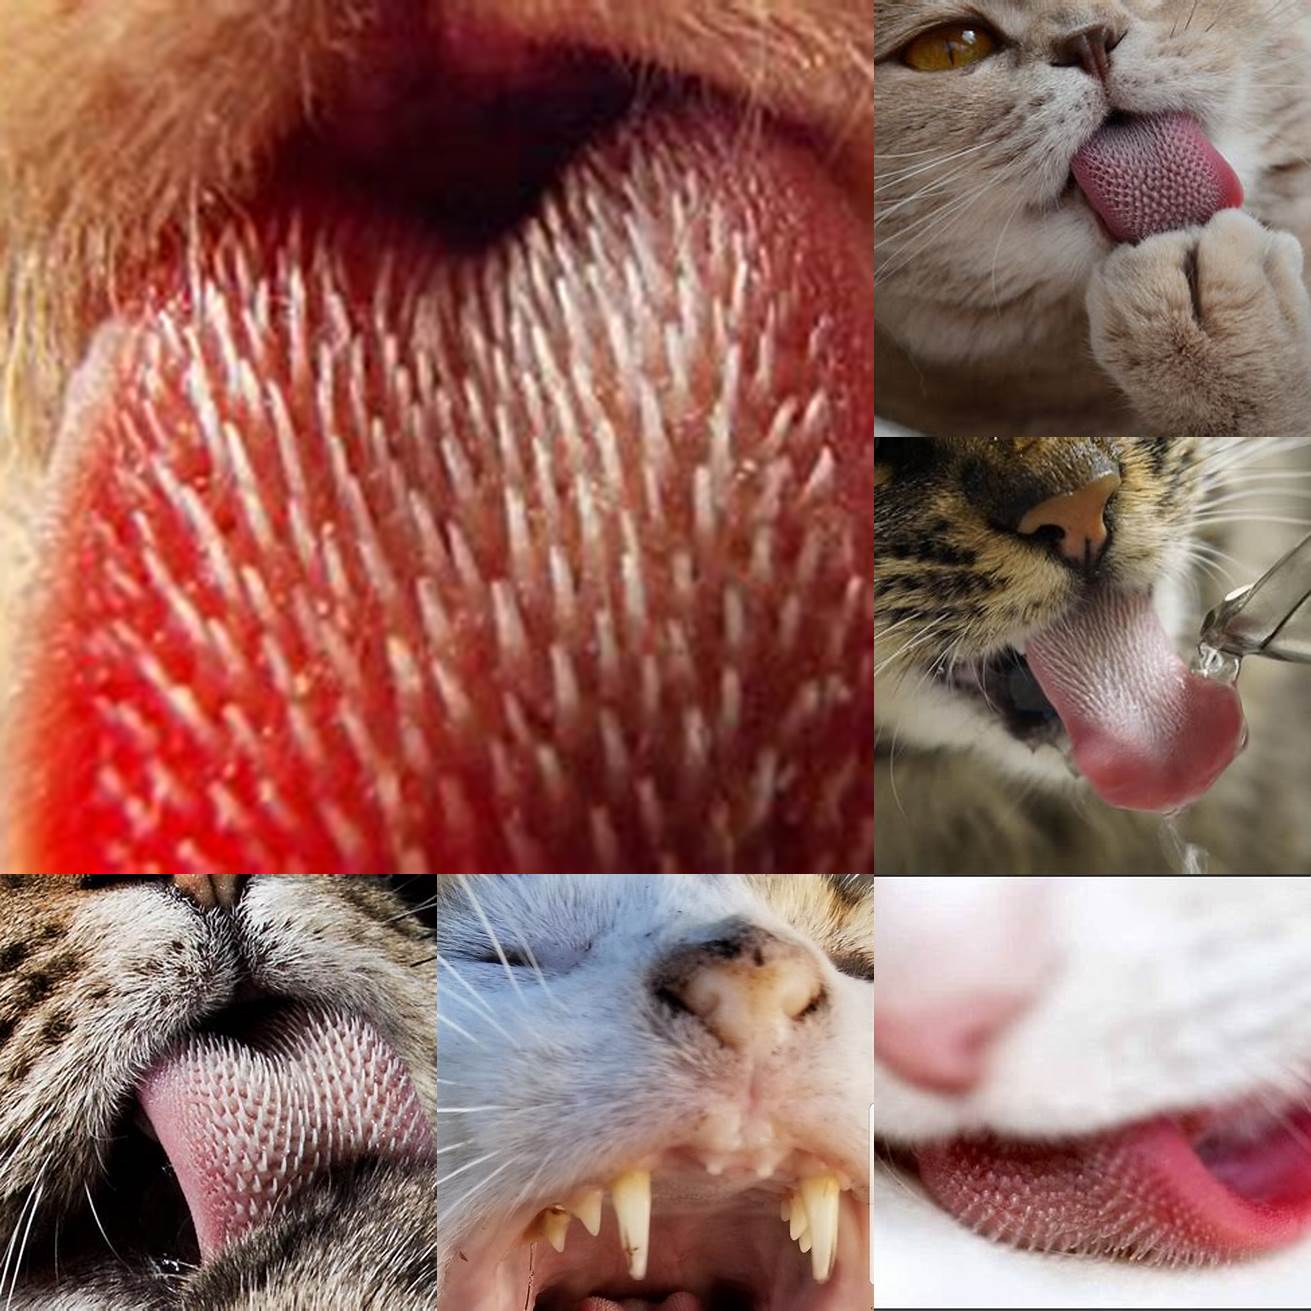 Cat tongue close-up